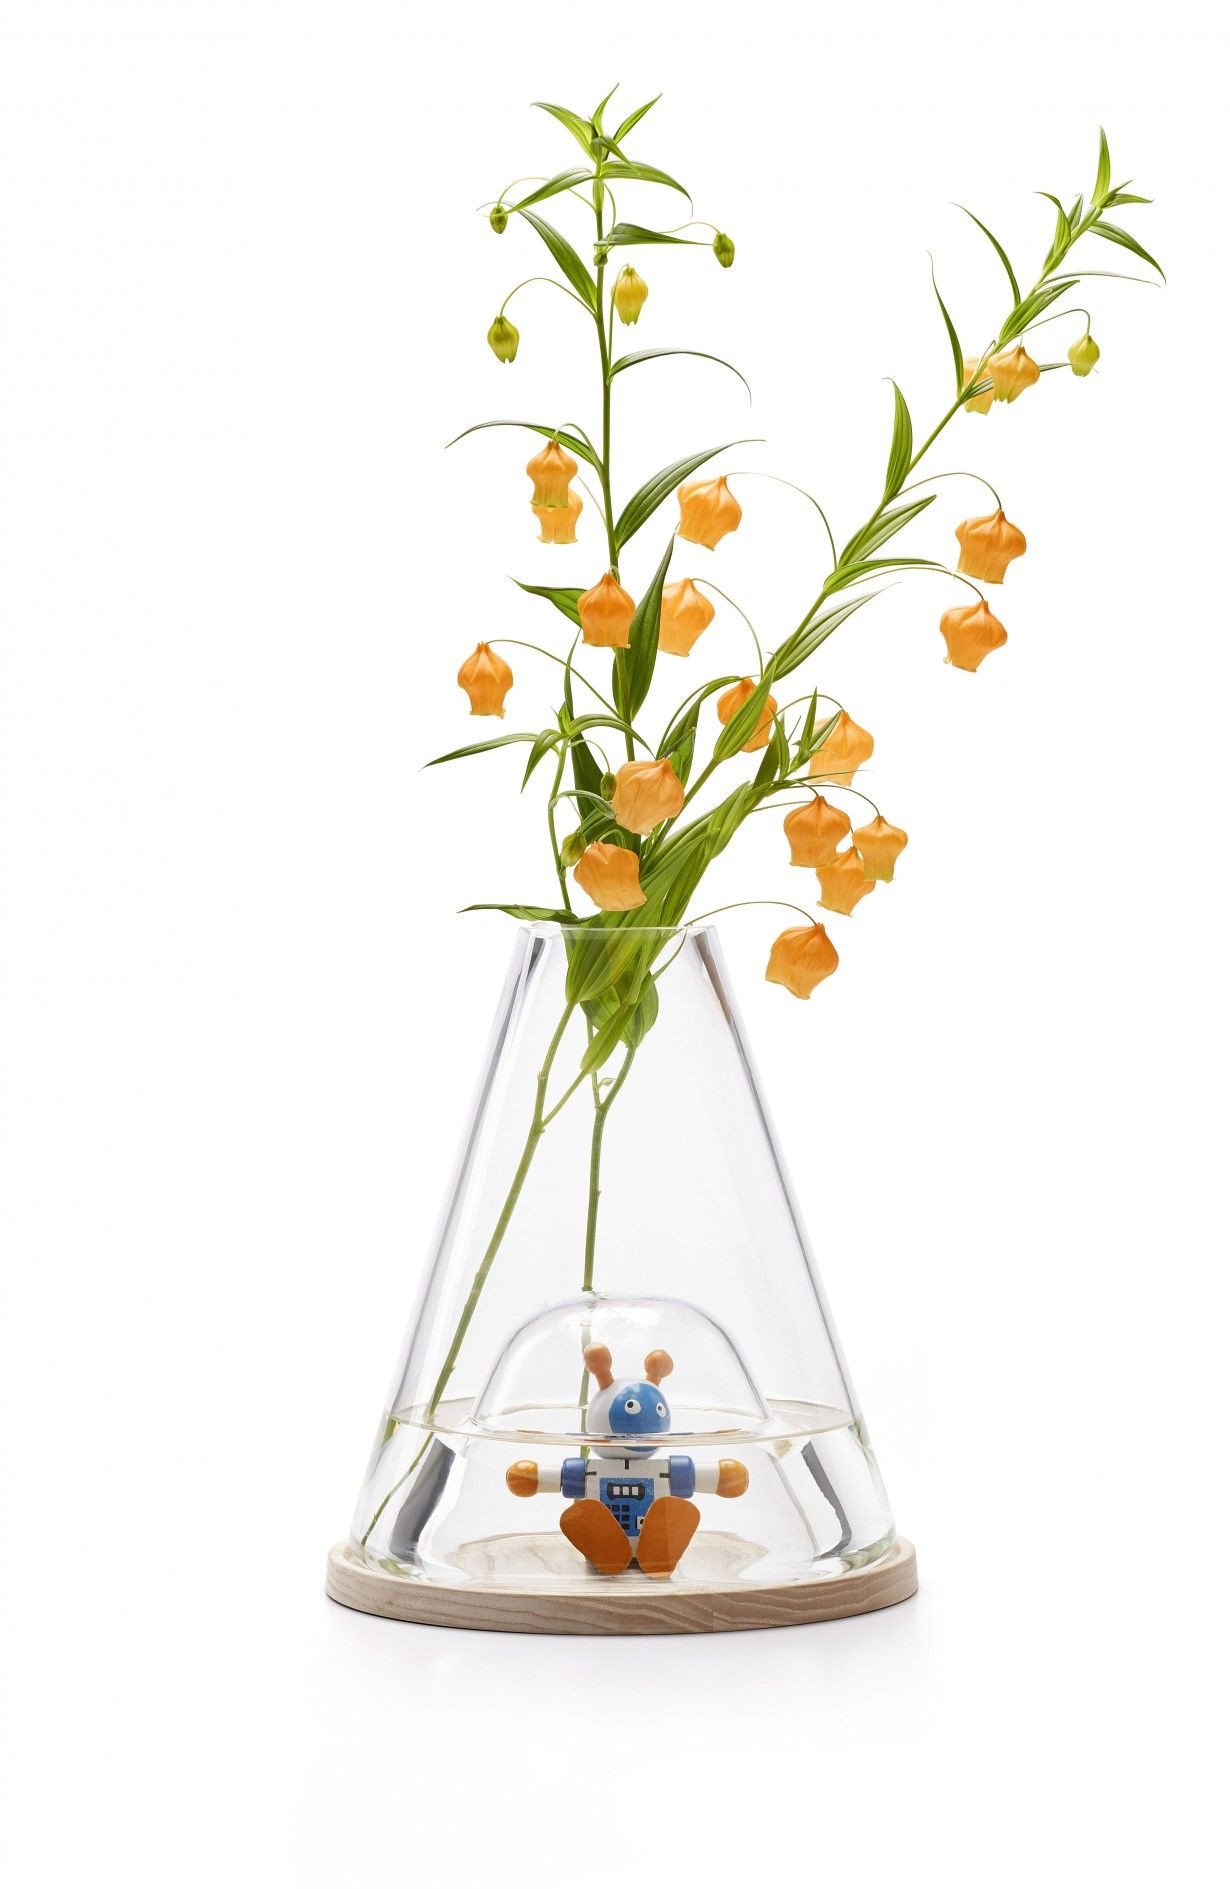 21 Spectacular Horizontal Glass Vase 2024 free download horizontal glass vase of ontwerpduo novecento bell jar vase great fun design gimmii with ontwerpduo novecento bell jar vase great fun design